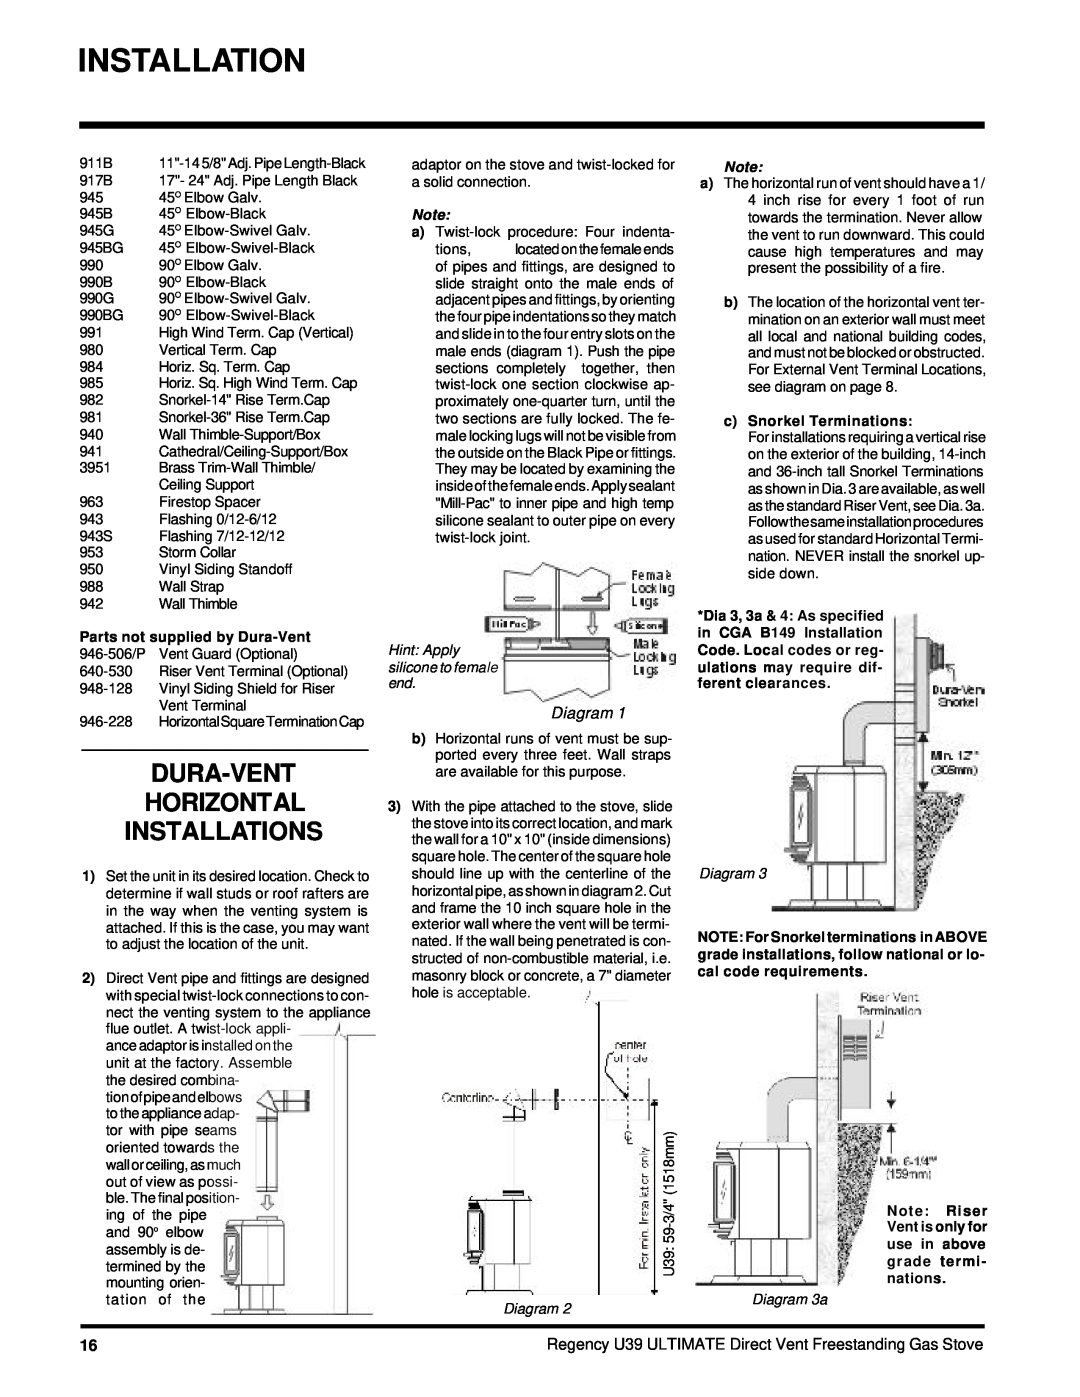 Regency U39-LP Dura-Vent Horizontal Installations, Diagram, Hint: Apply silicone to female end, cSnorkel Terminations 